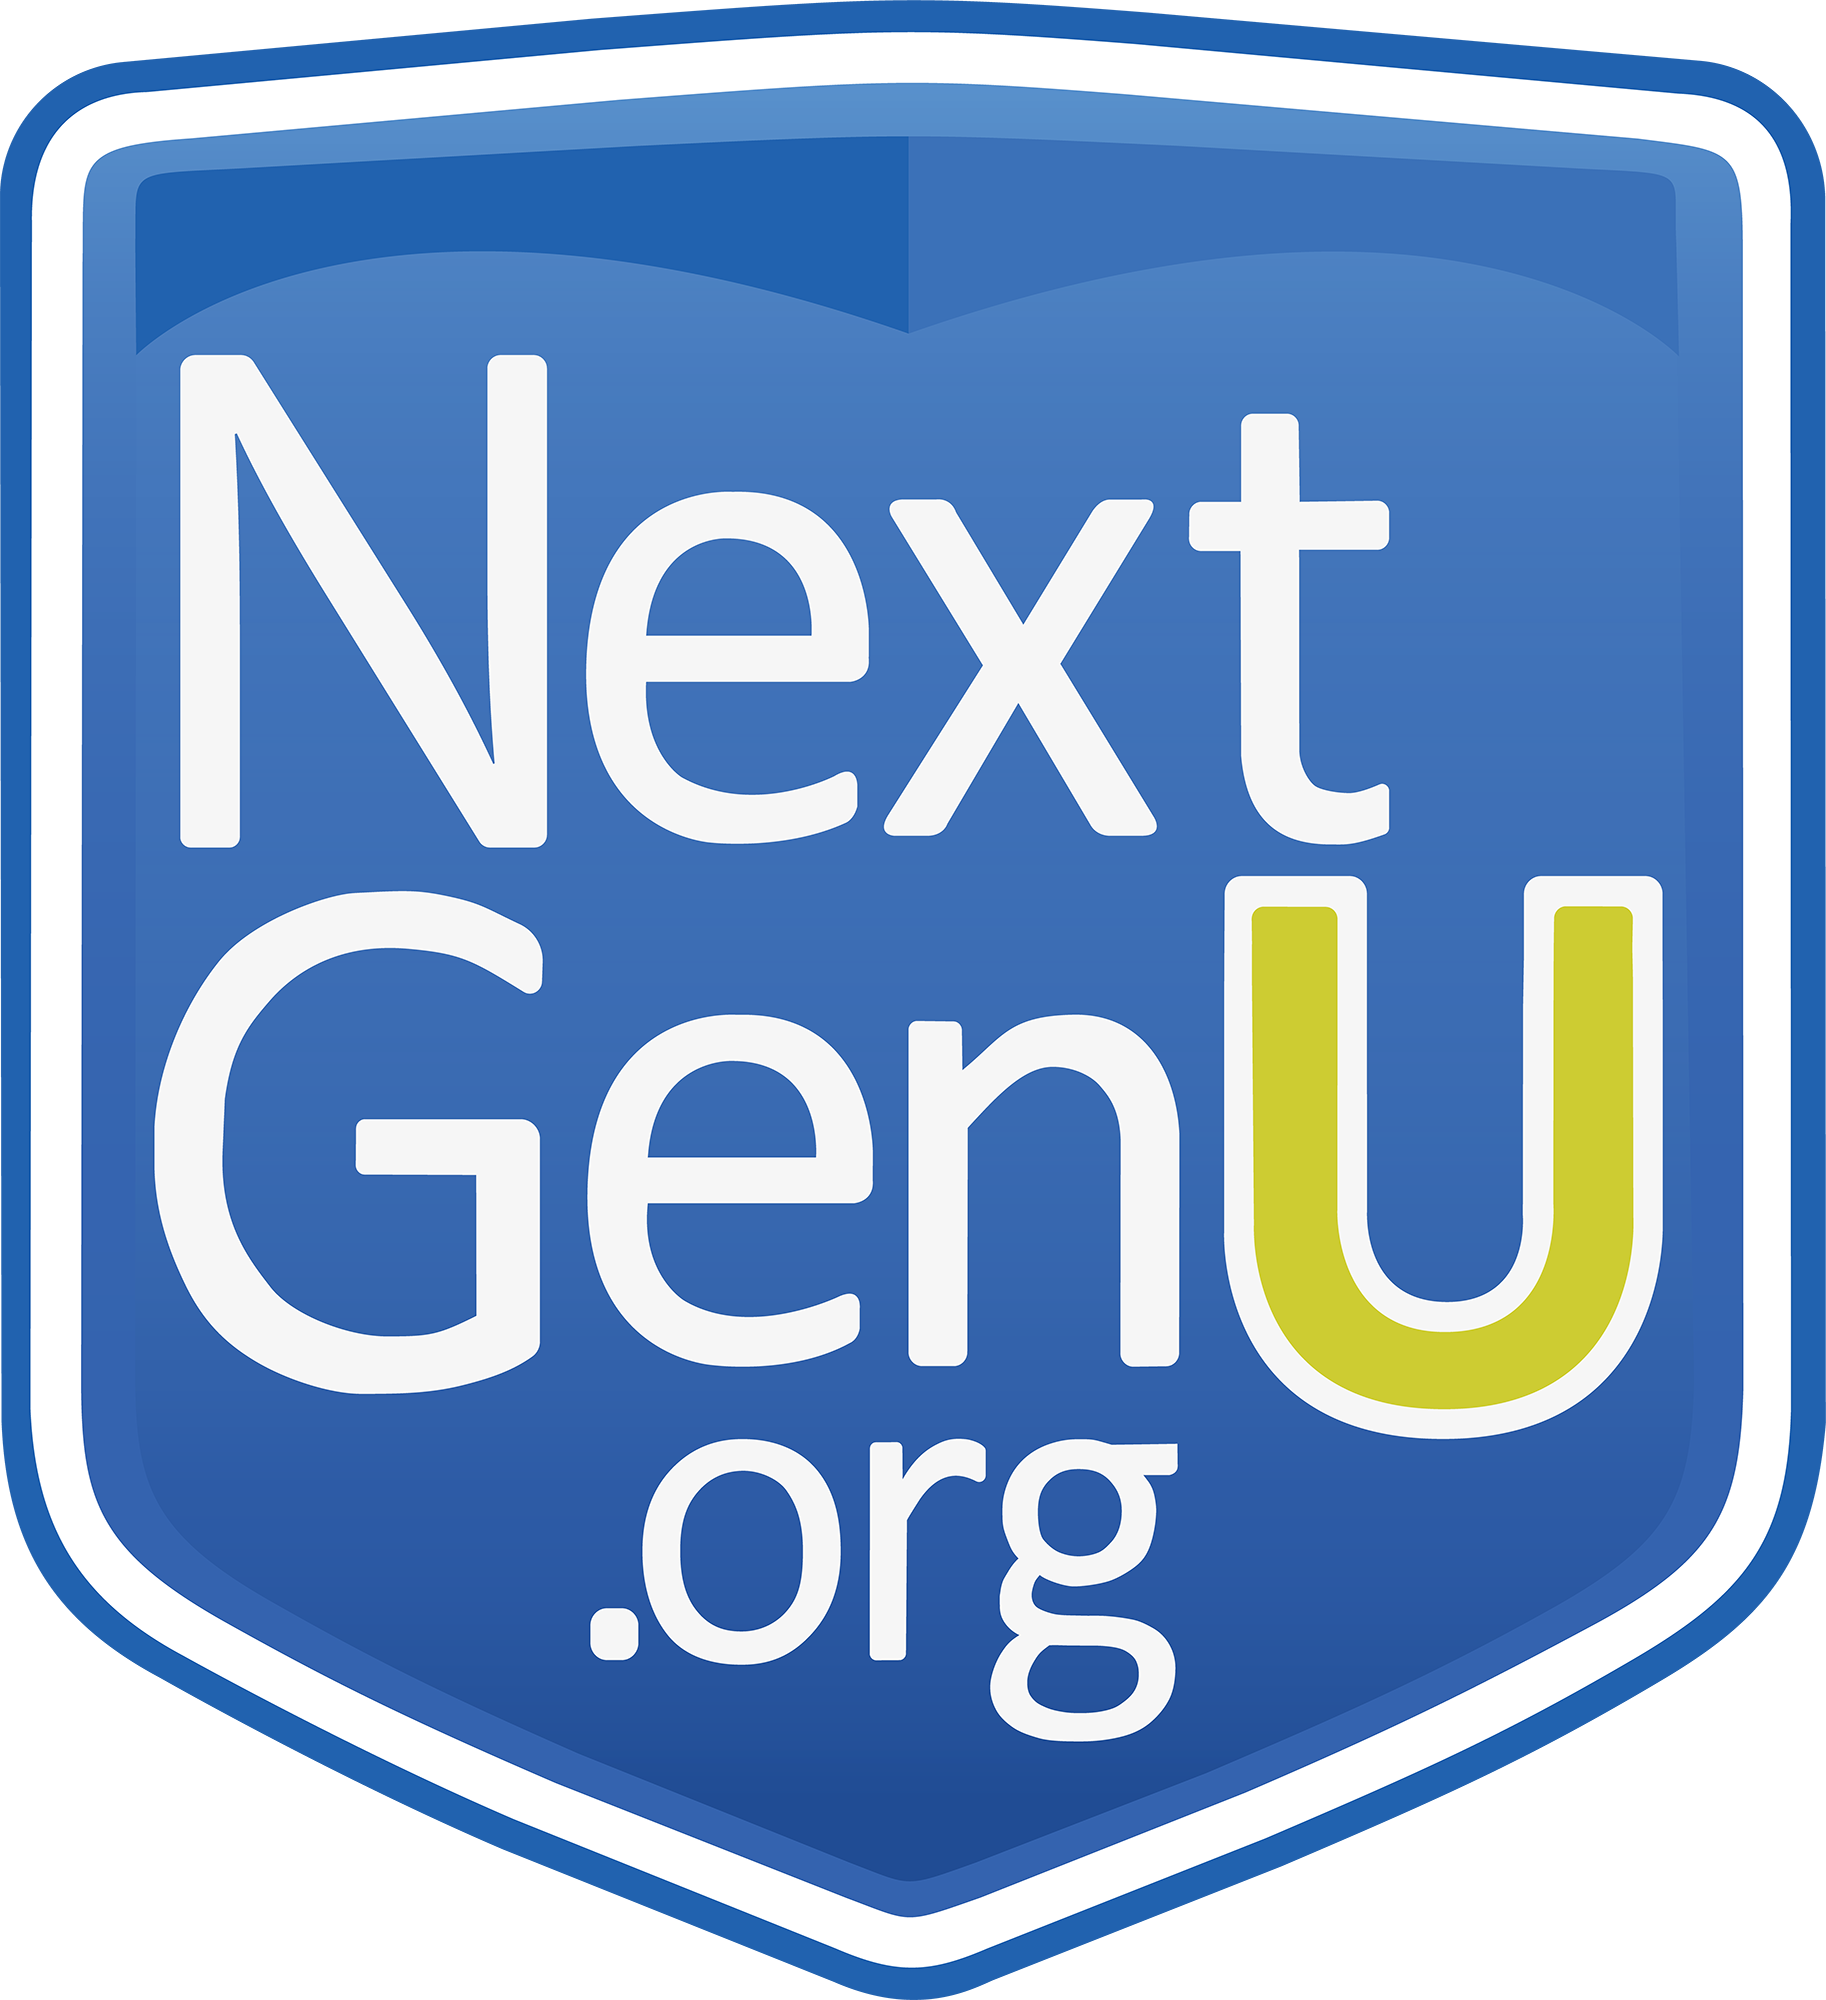 NextGenU.org